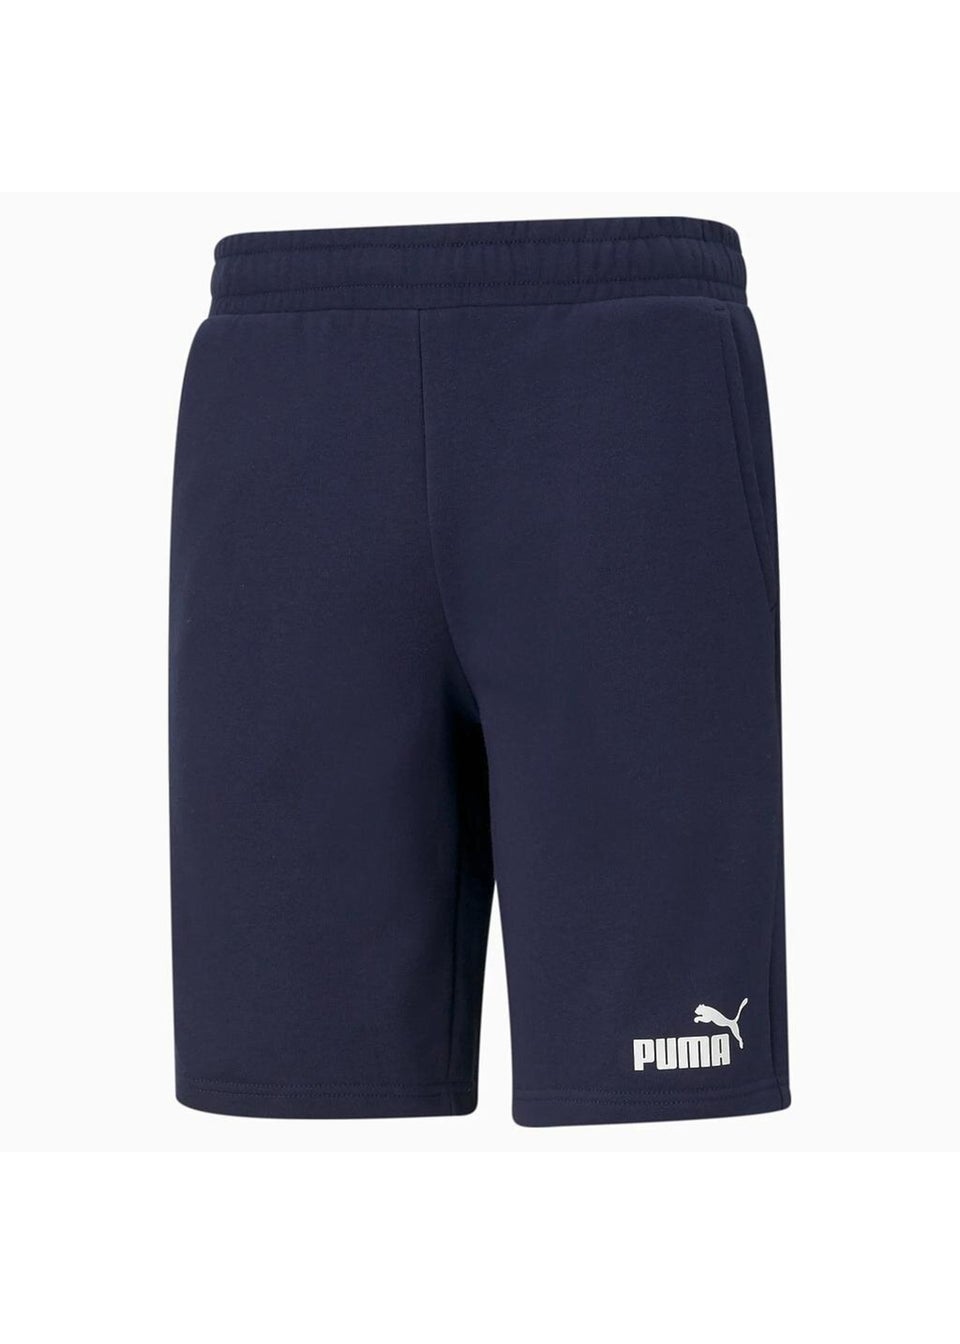 Puma Peacock ESS Shorts